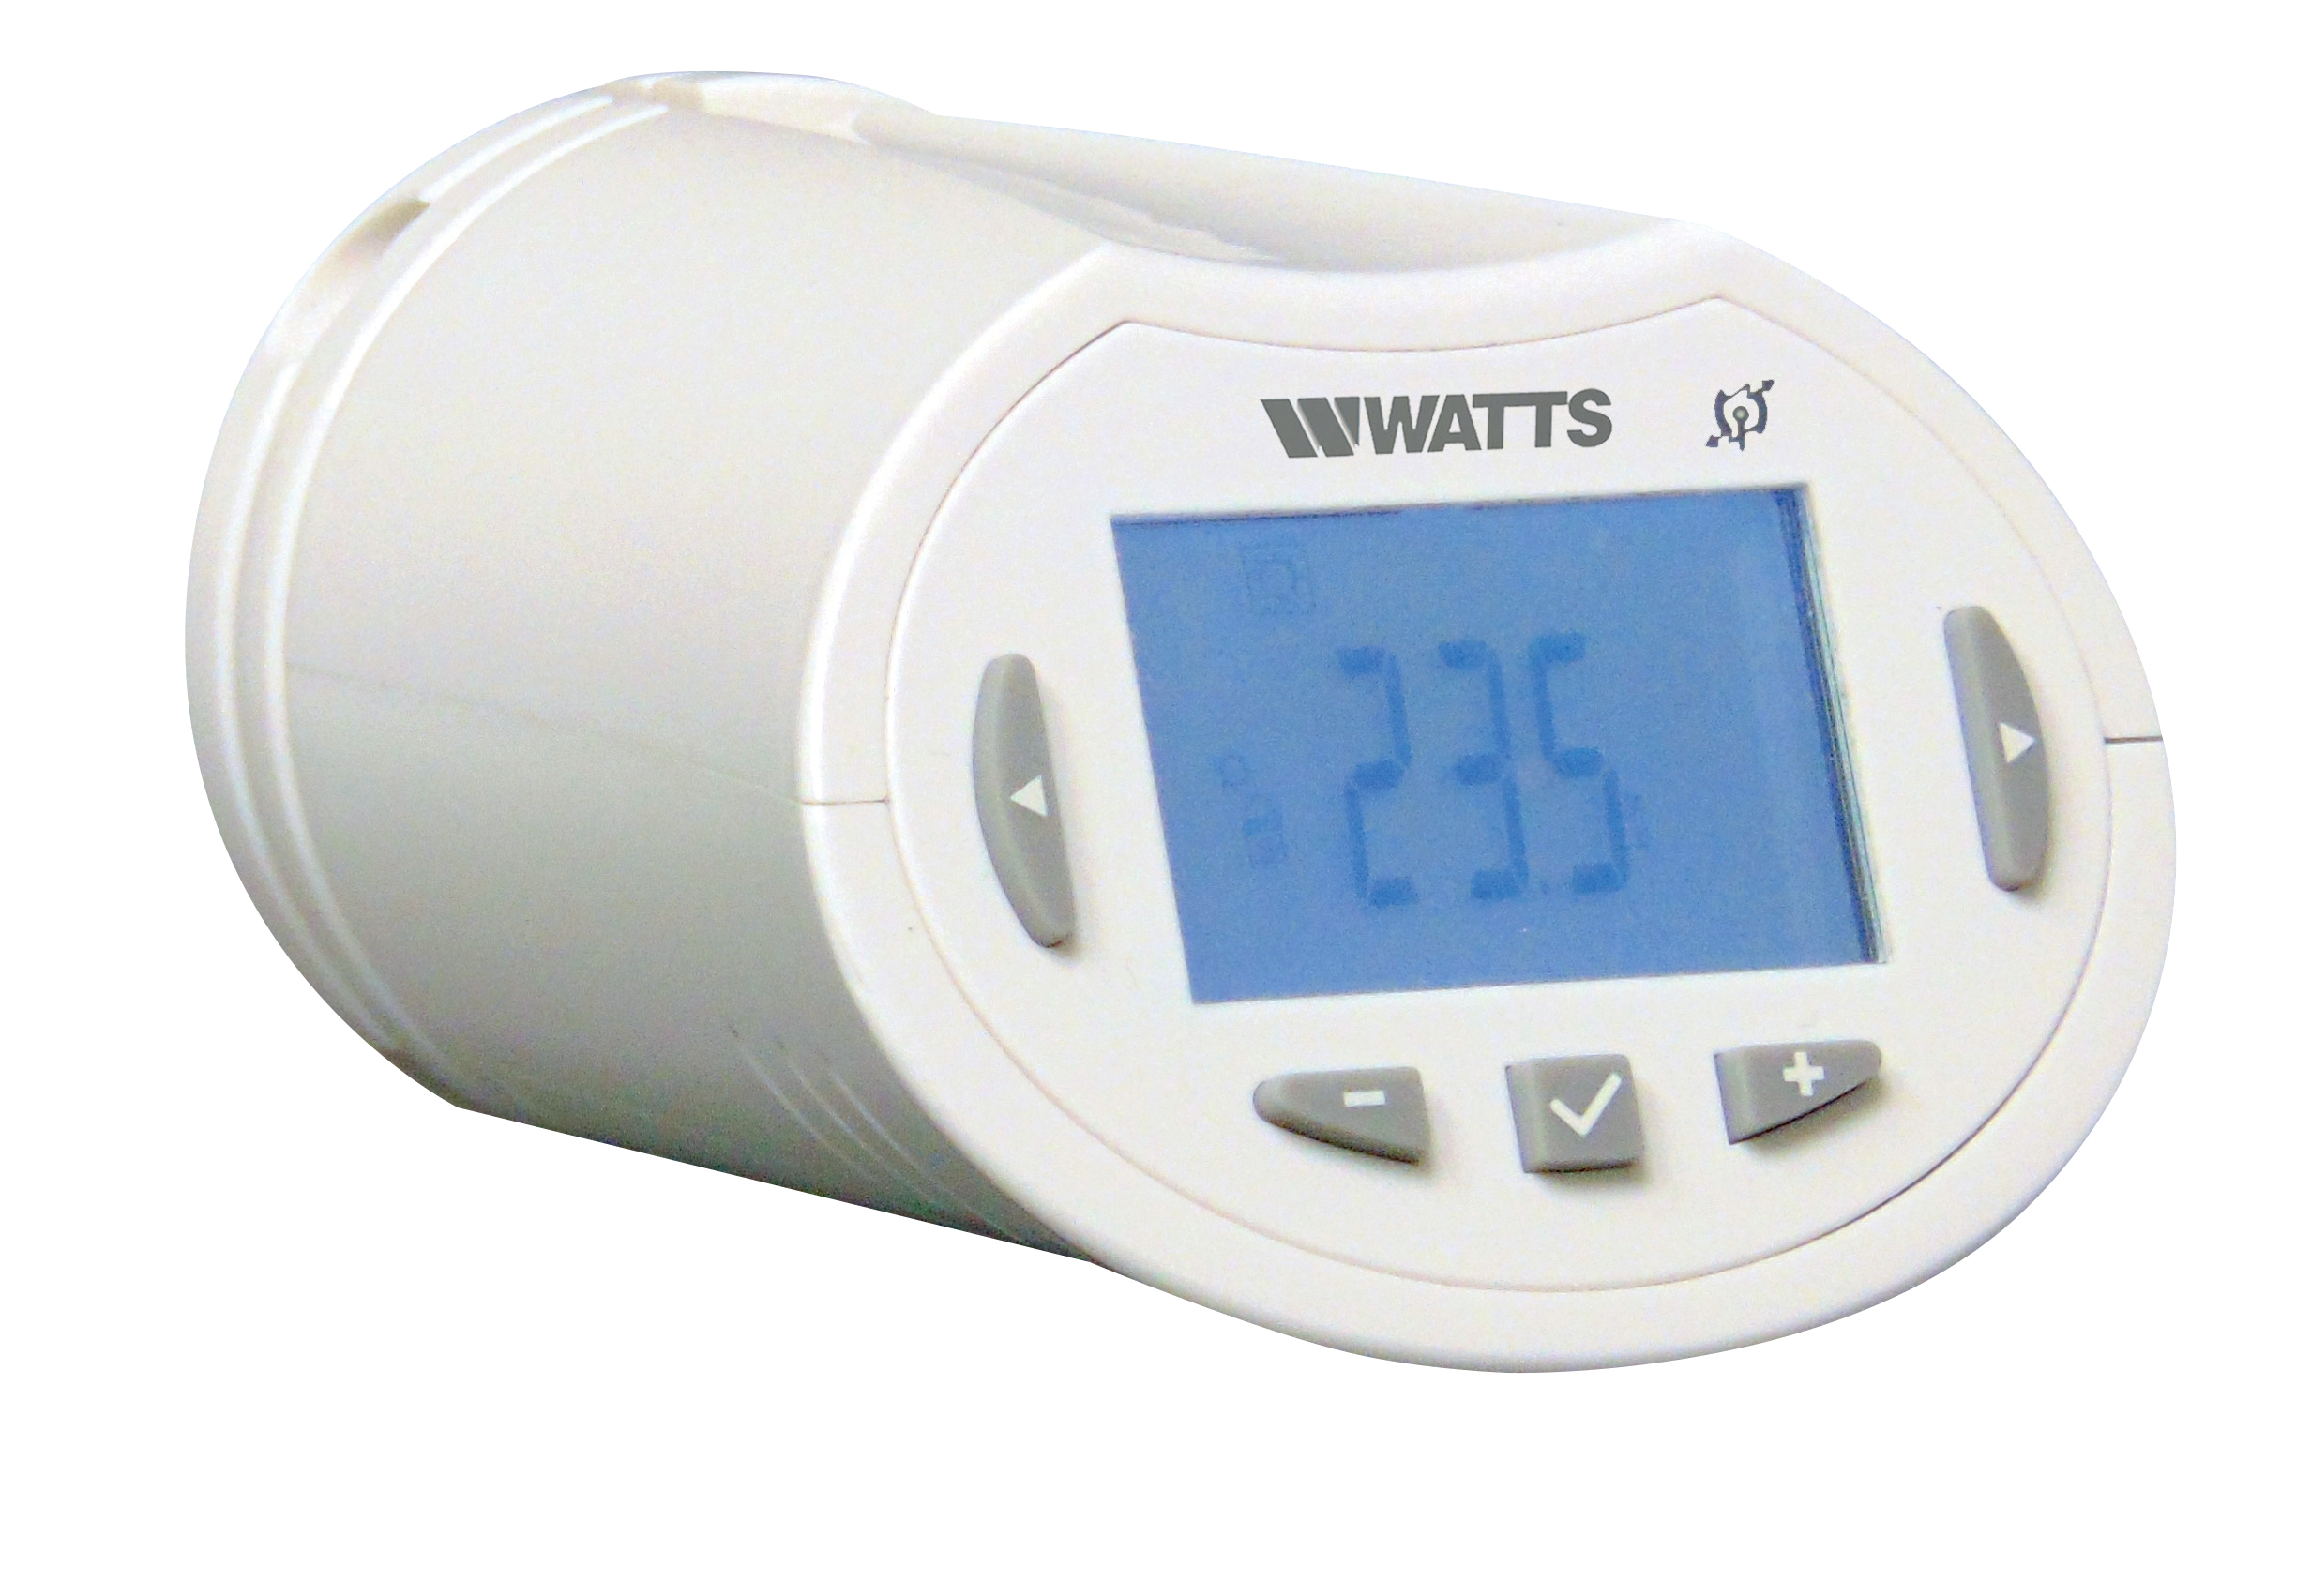 Vision Wireless di Watts, domotica per comfort ed efficienza energetica